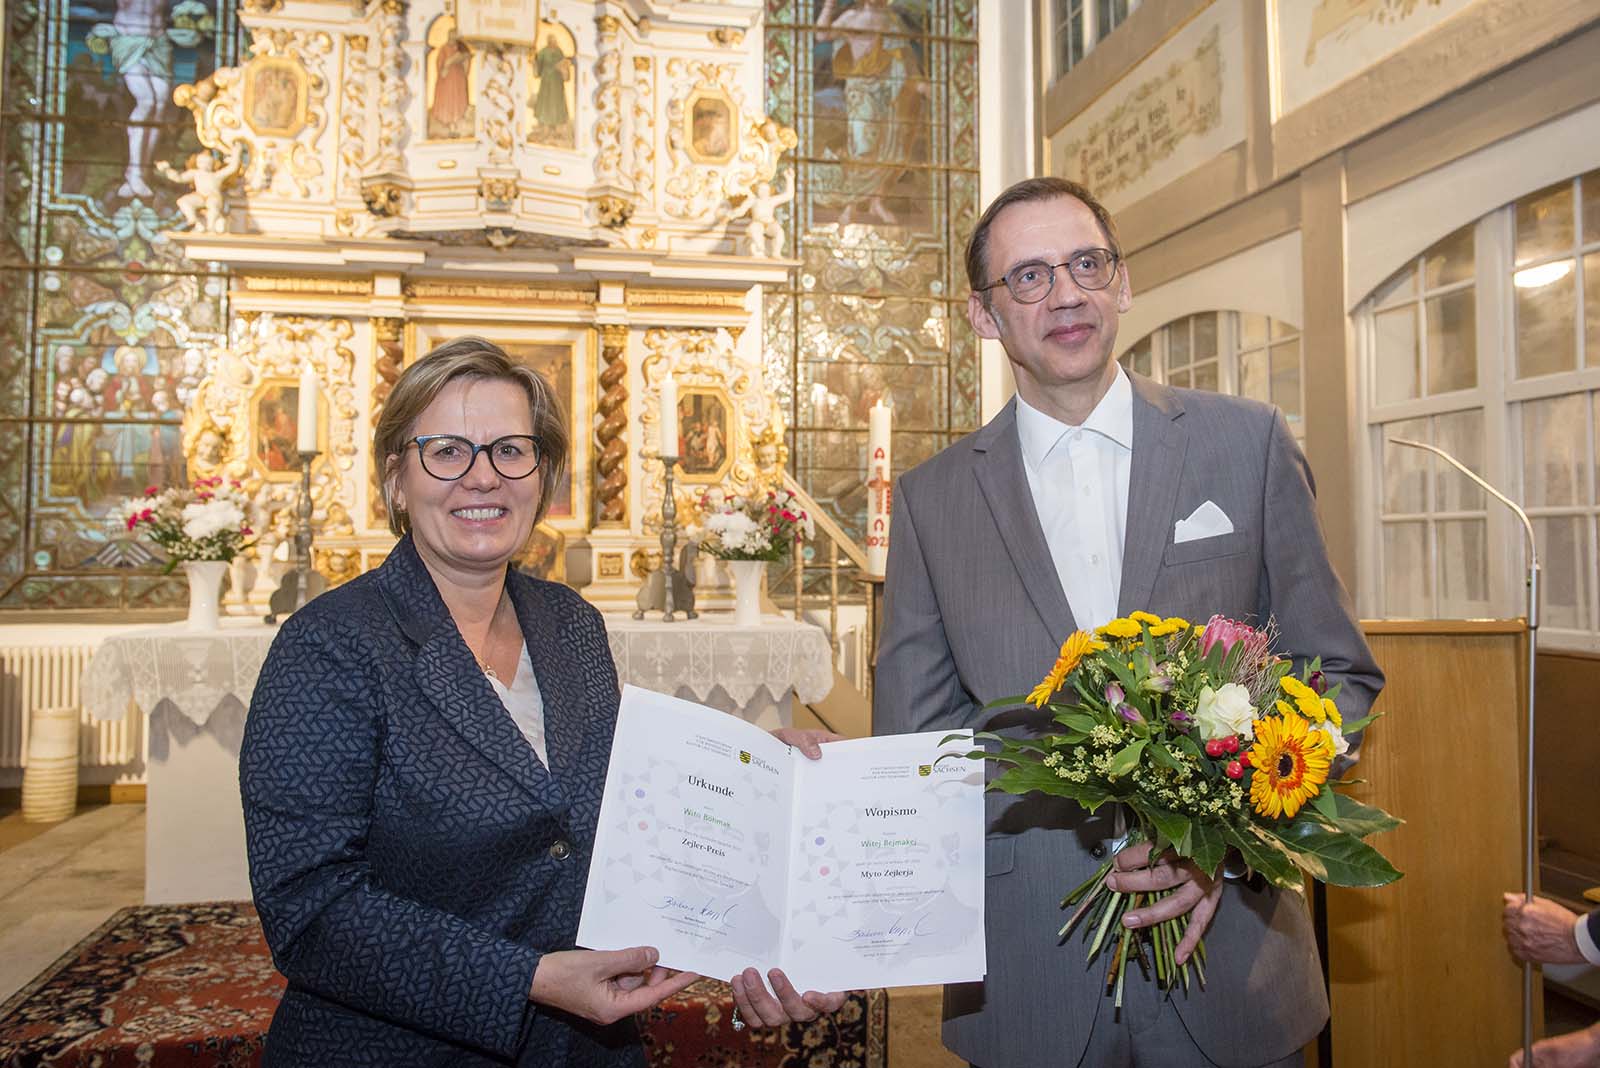 Kulturministerin Barbara Klepsch übergibt Wito Bejmak / Böhmak den Zejler-Preis 2022